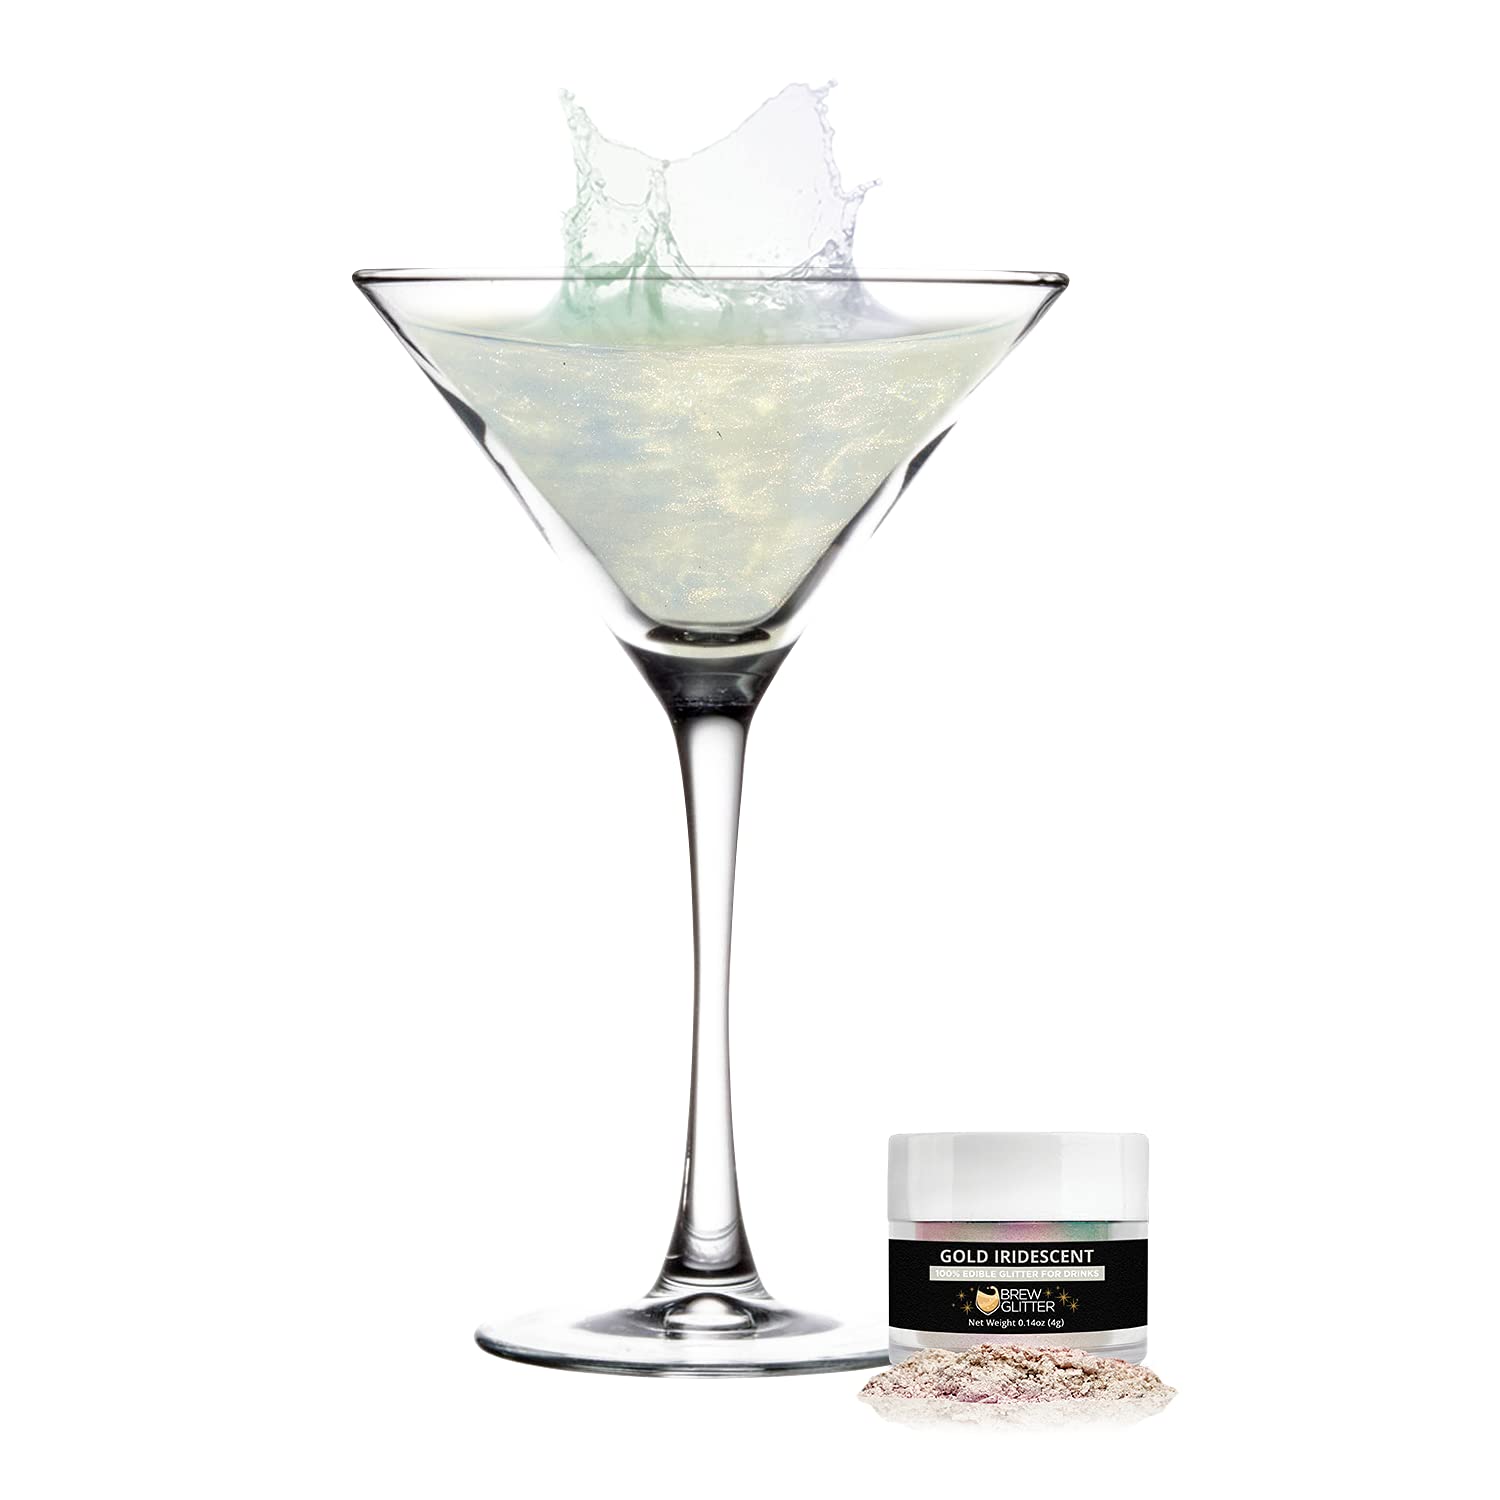 BREW GLITTER White Edible Glitter For Drinks, Cocktails, Beer, Drink  Garnish & Beverages | 4 Gram | KOSHER Certified | 100% Edible & Food Grade  